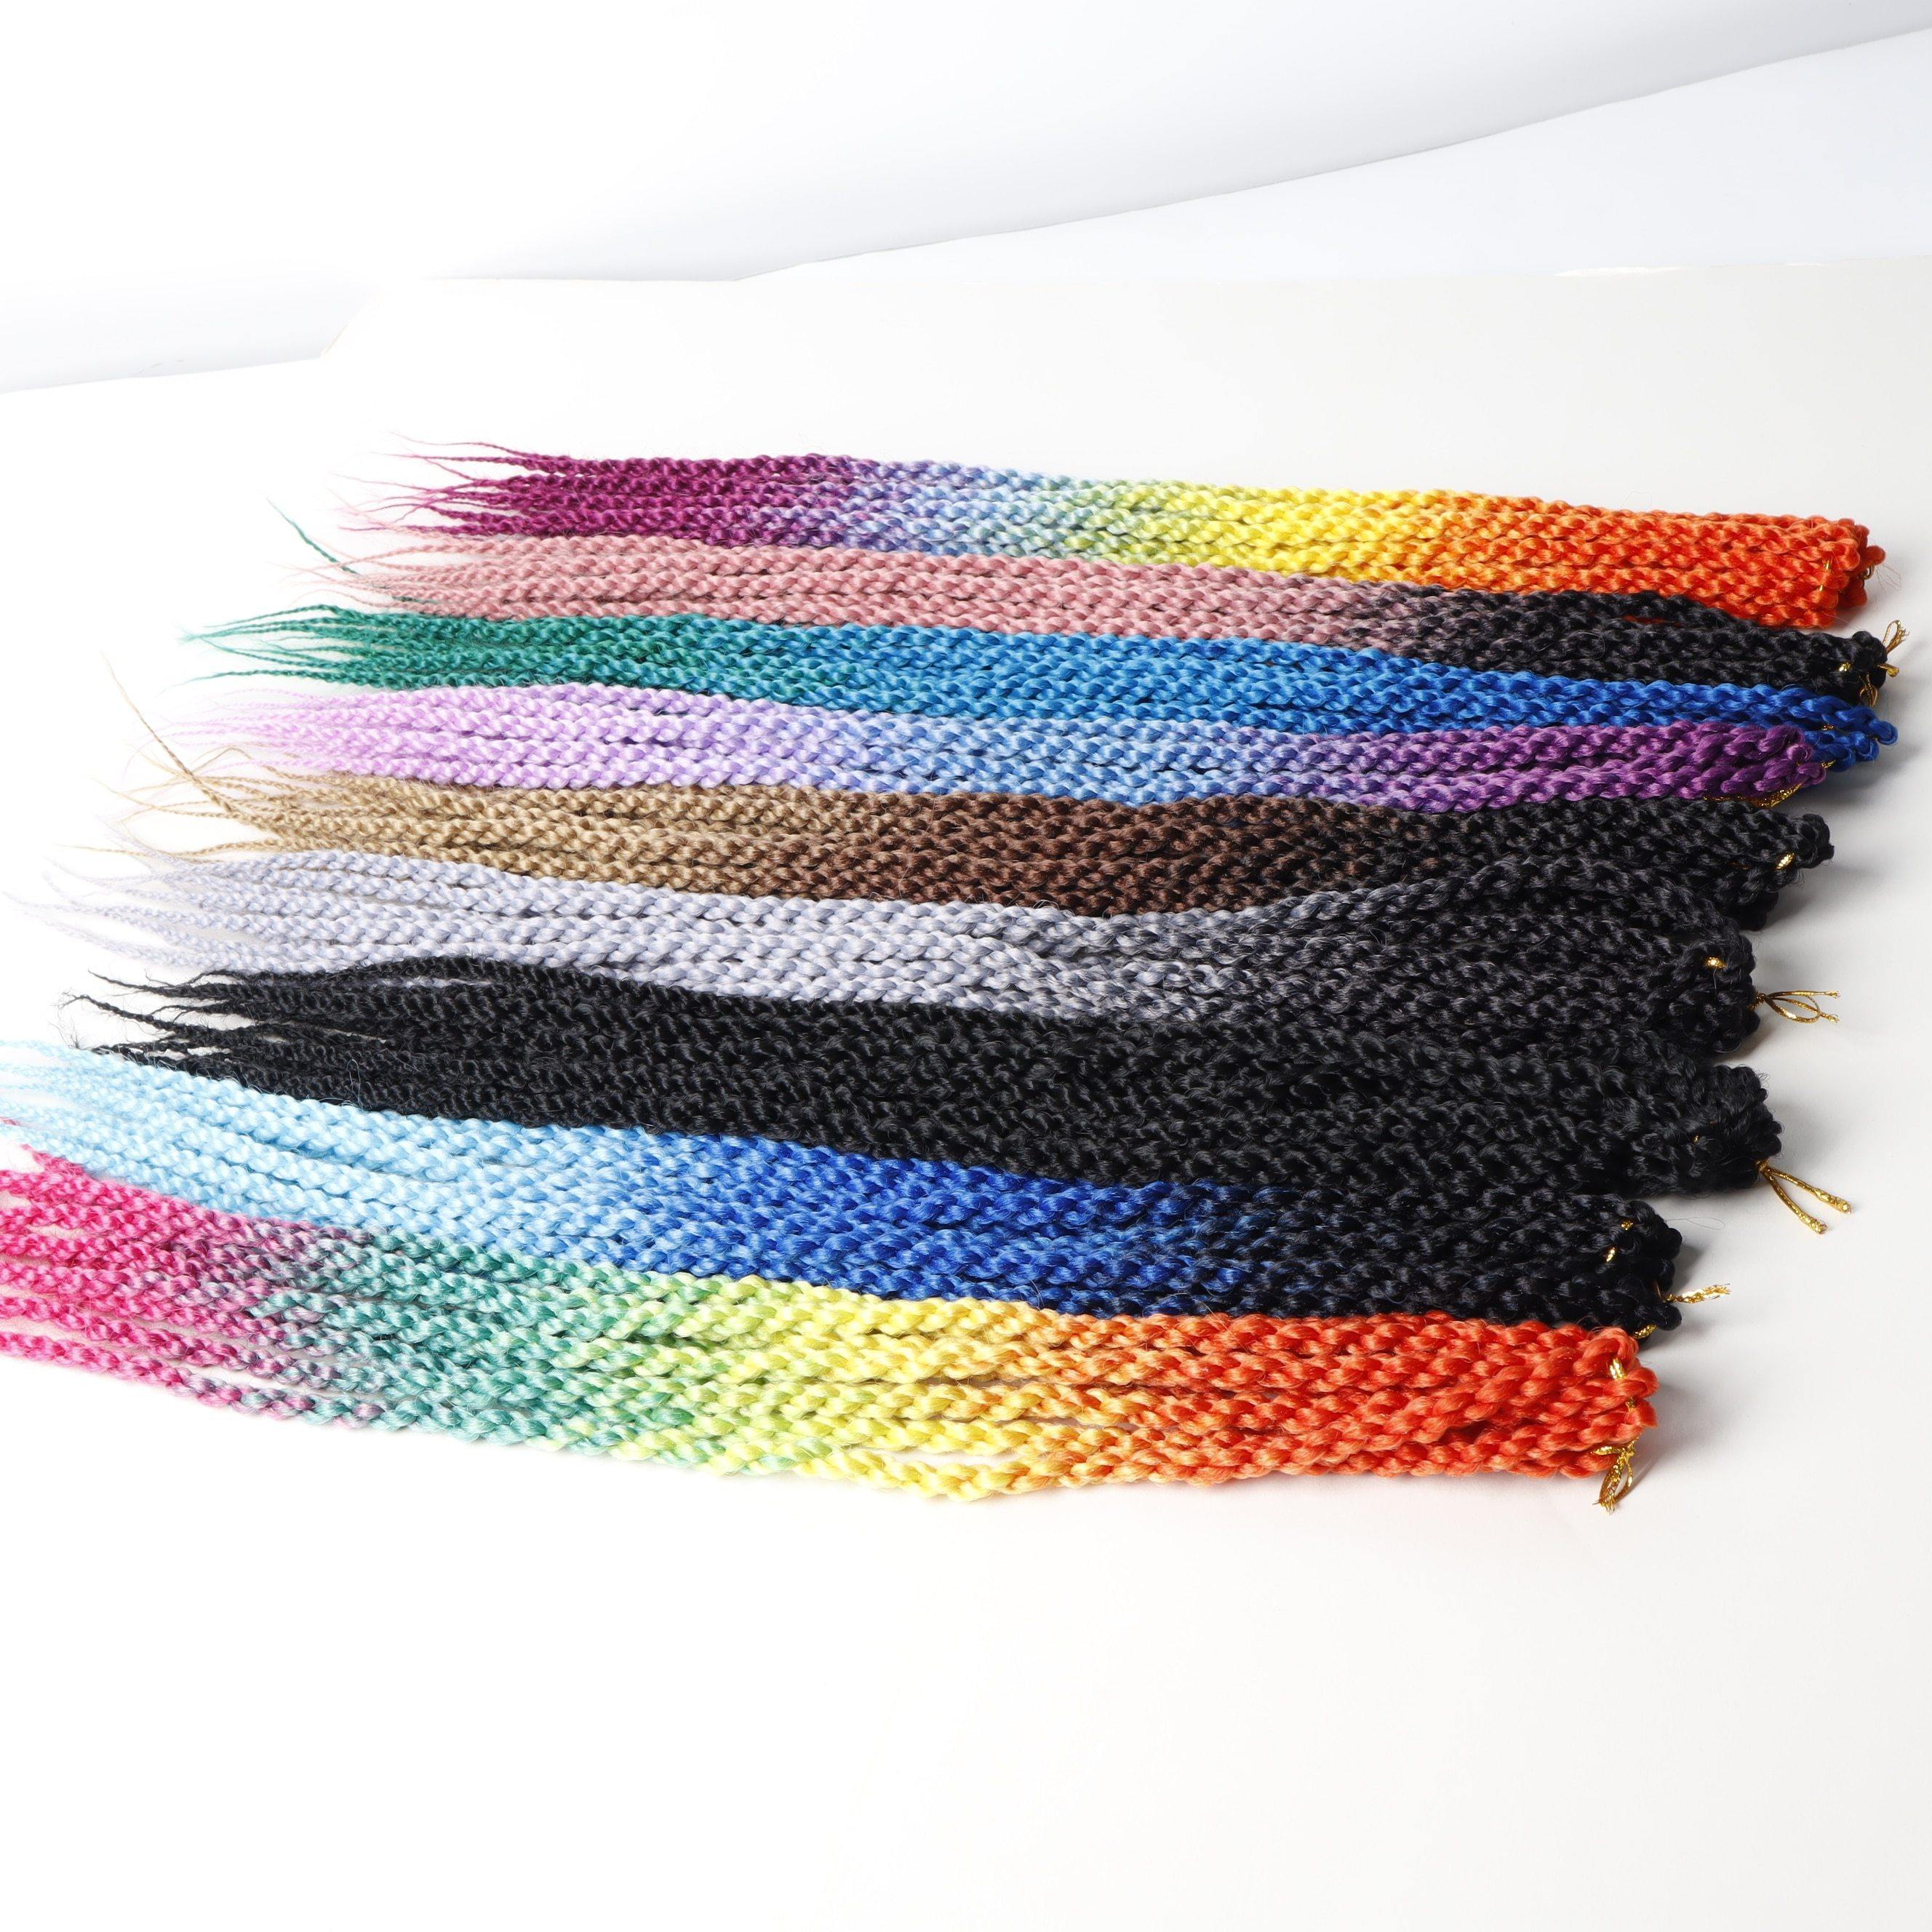 Cubic Twist Crochet Braids Ombre Hair Extensions | 10 Strands - Woodland Gatherer